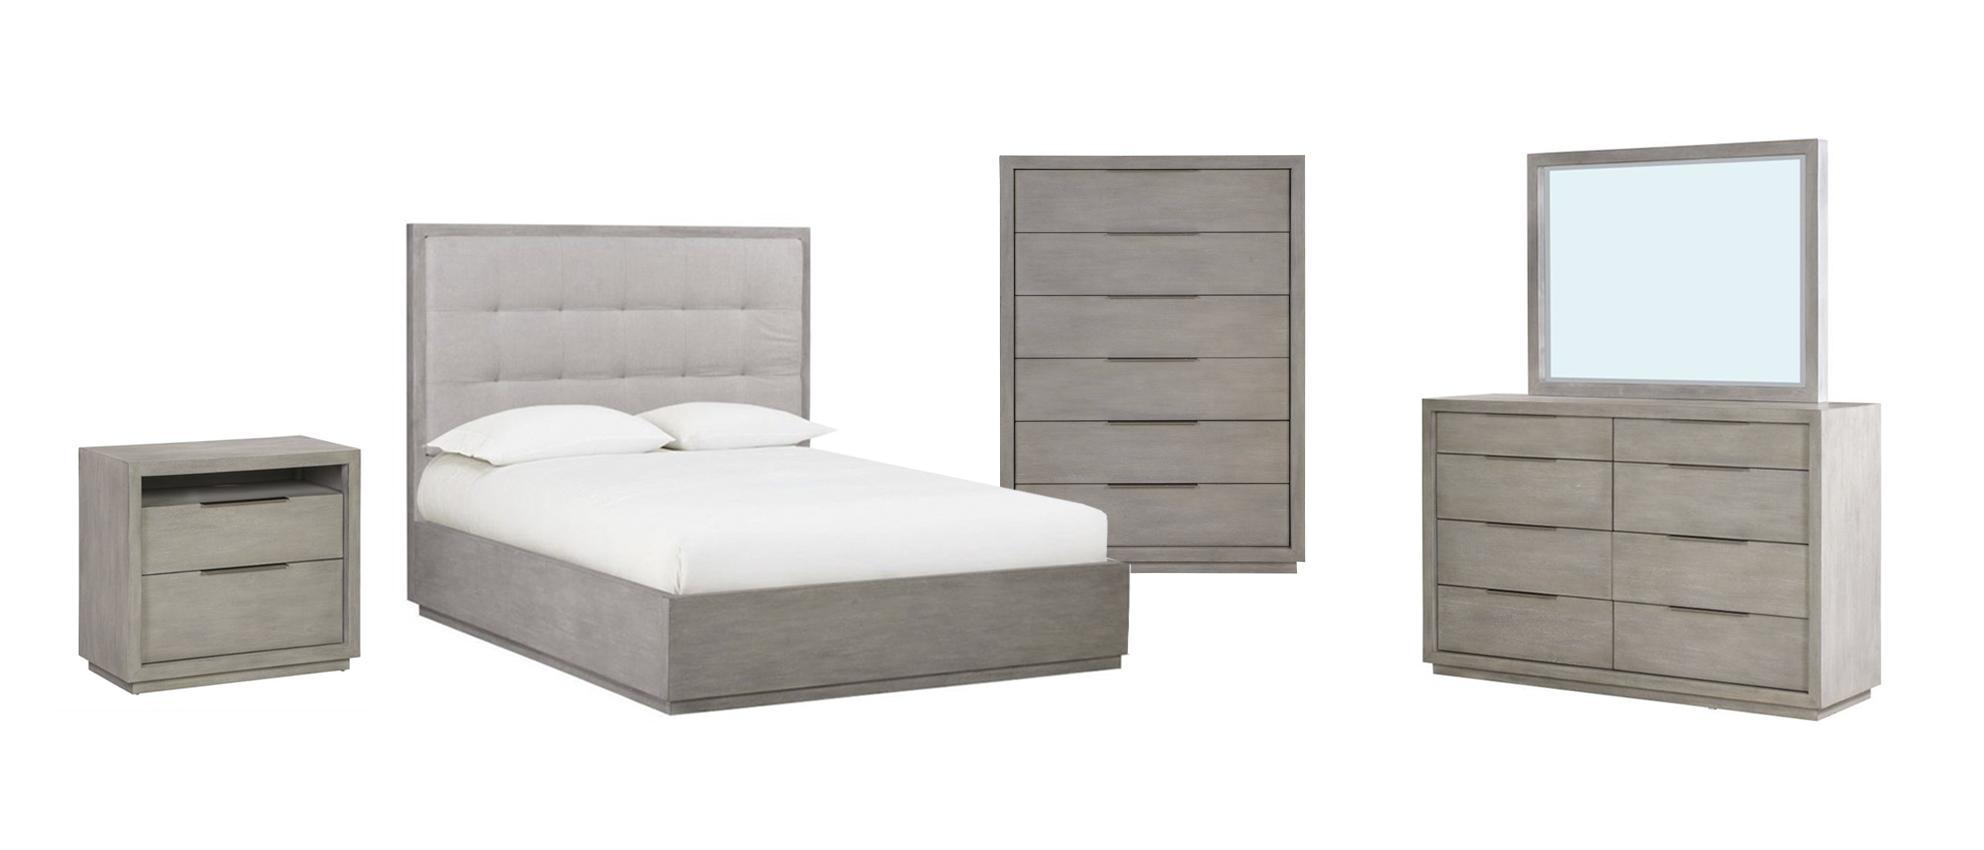 Contemporary Storage Bedroom Set OXFORD STORAGE AZBXS5-NDMC-5PC in Light Gray, Stone Fabric